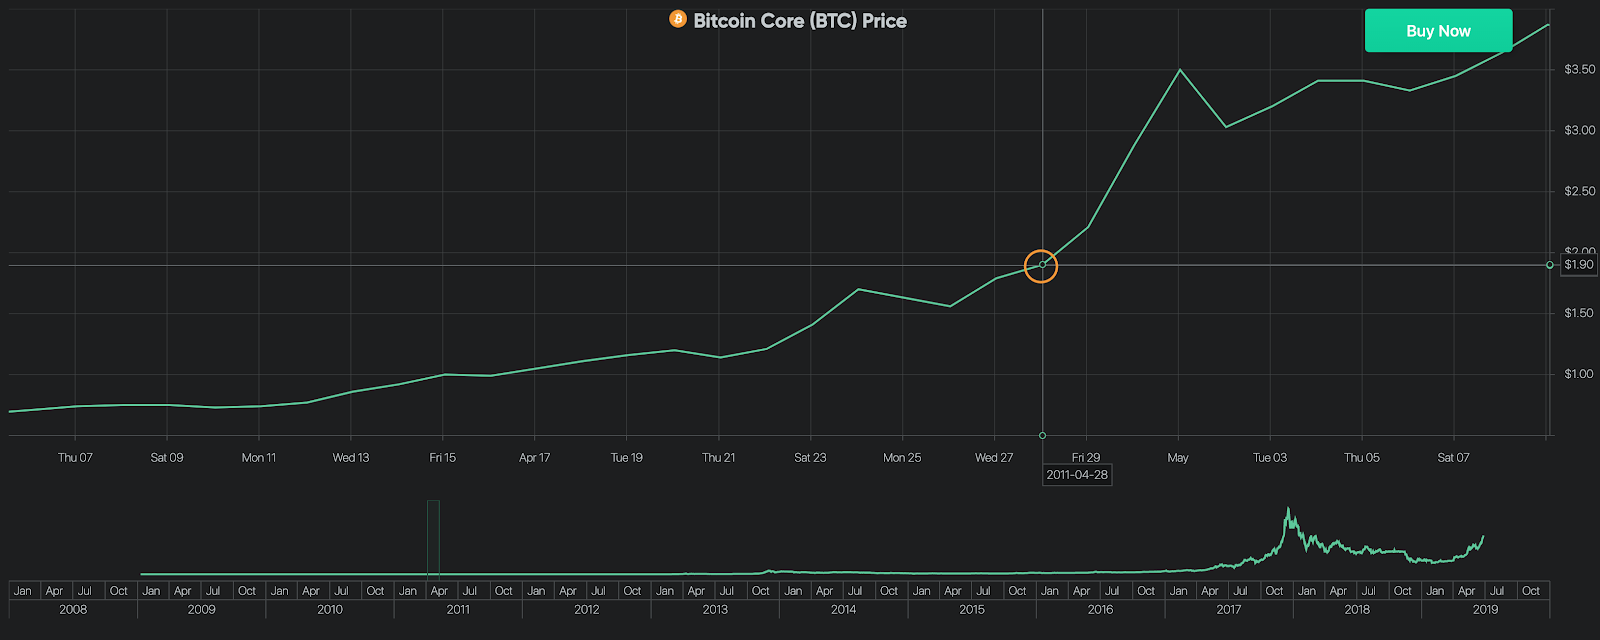 Bitcoin Price on April 28, 2011